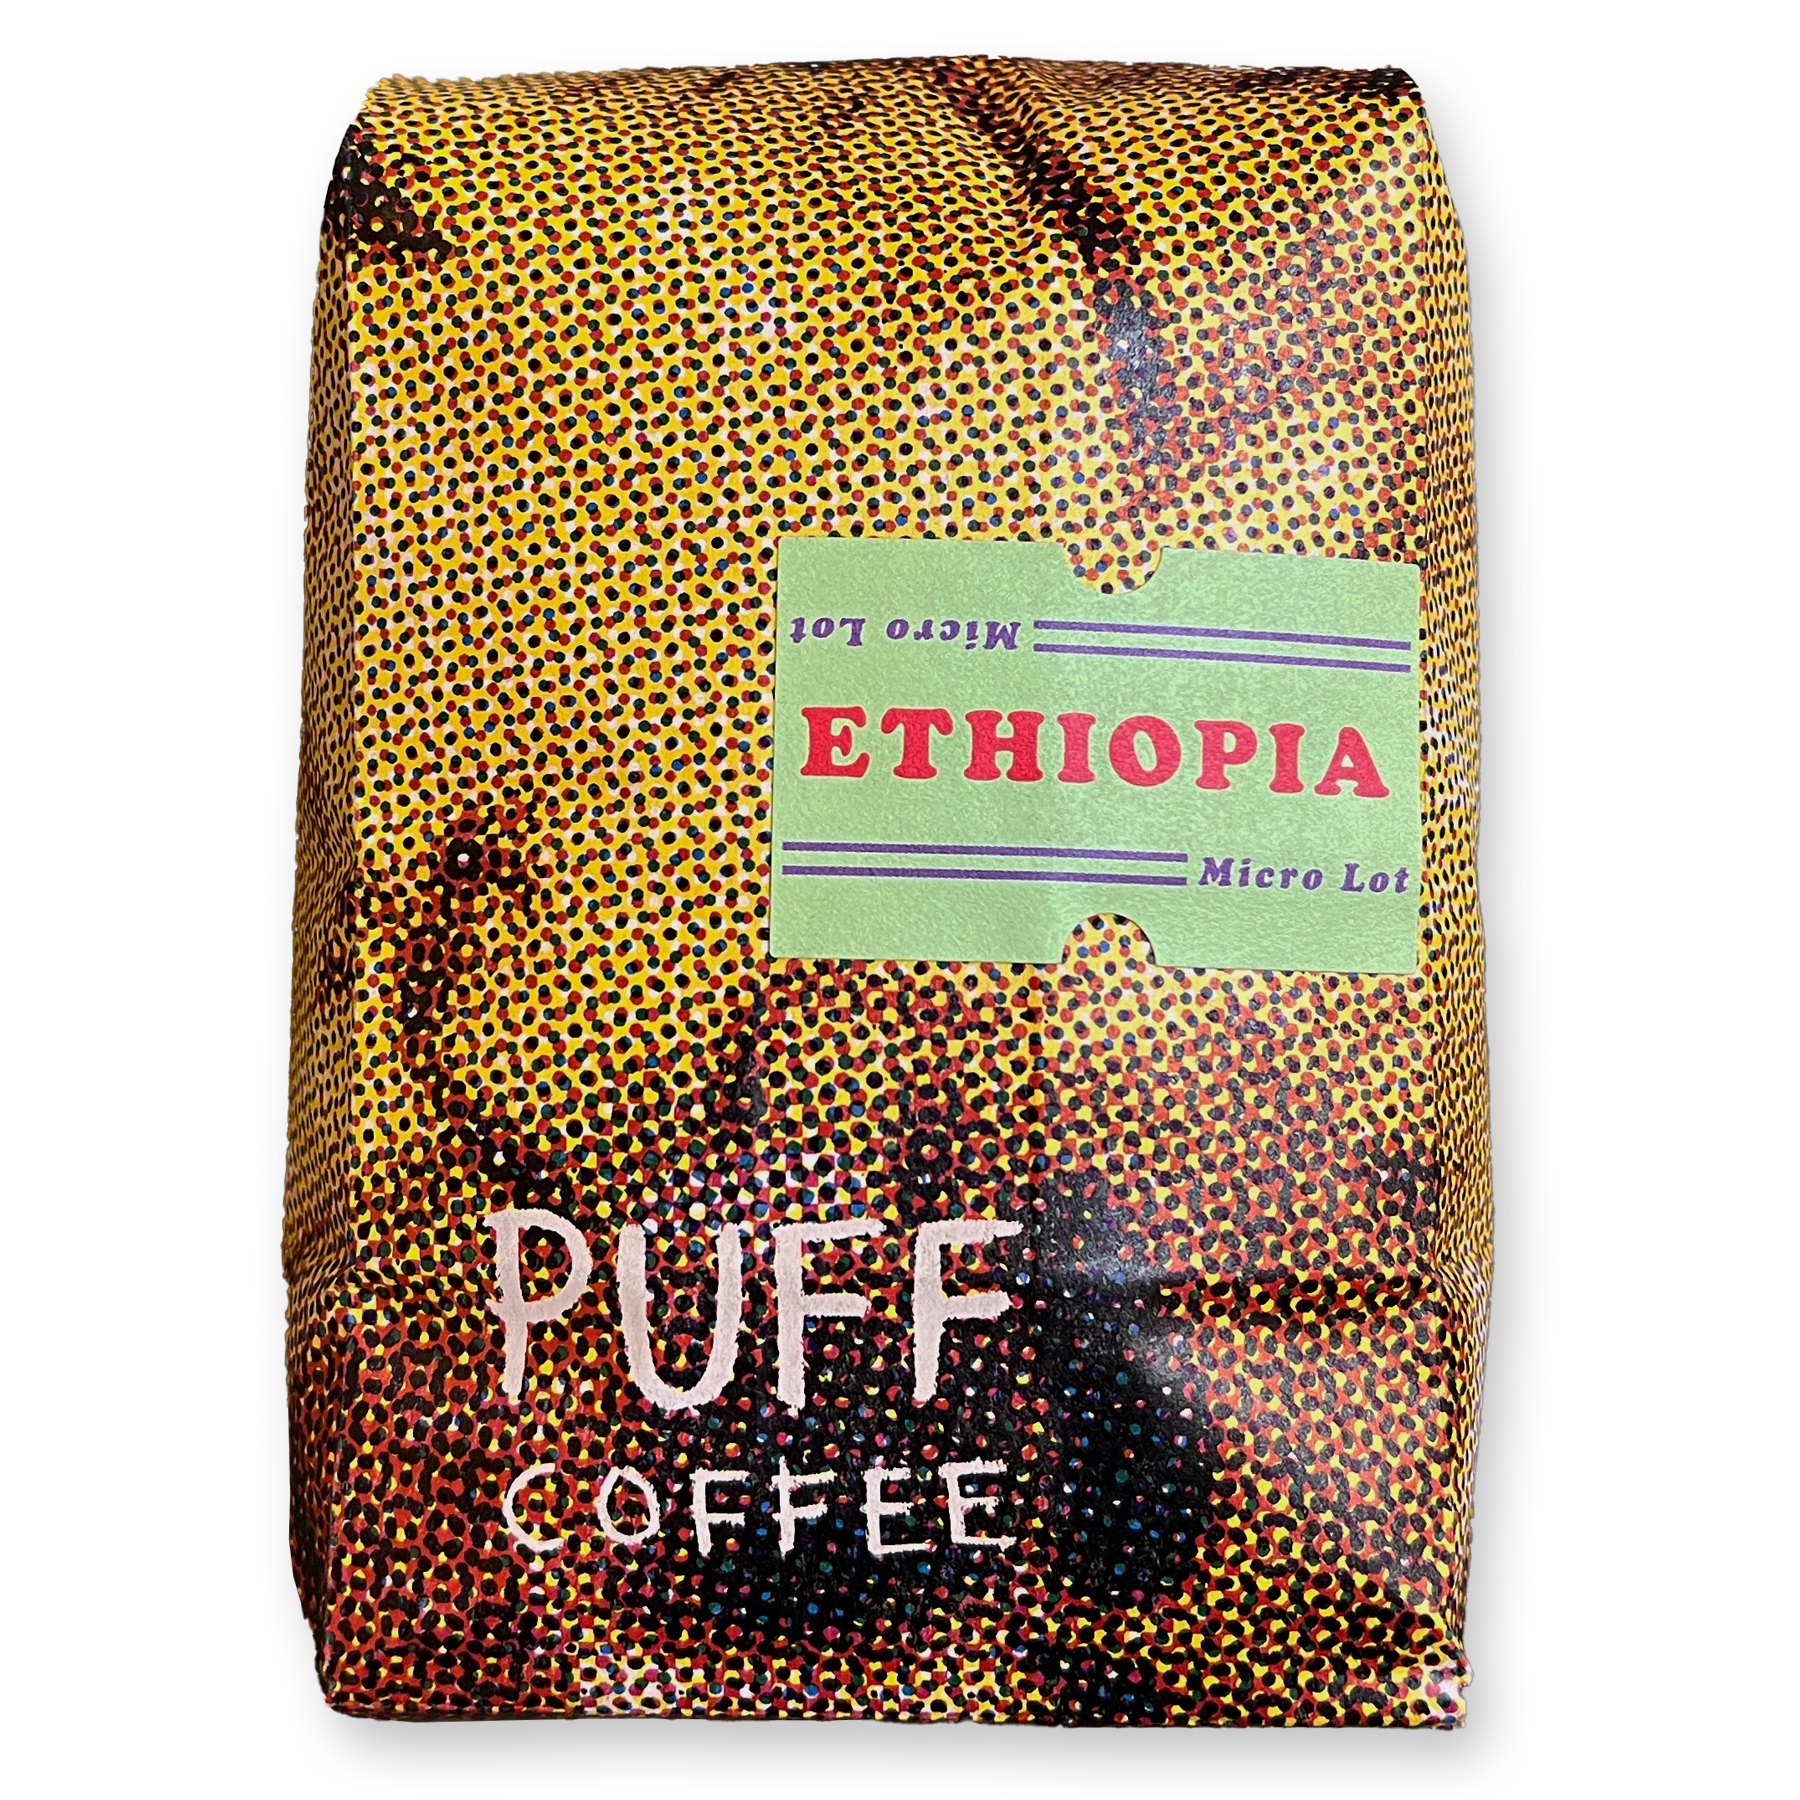 Ethiopia Micro Lot from Puff Coffee